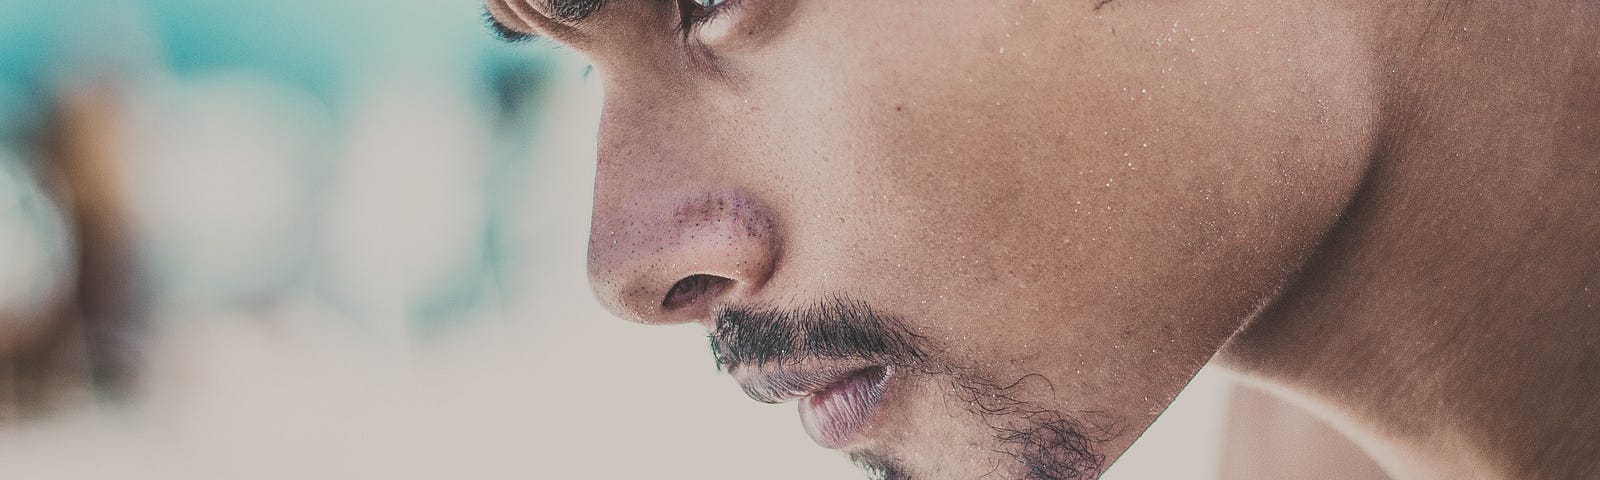 Focus photo of a man’s face.